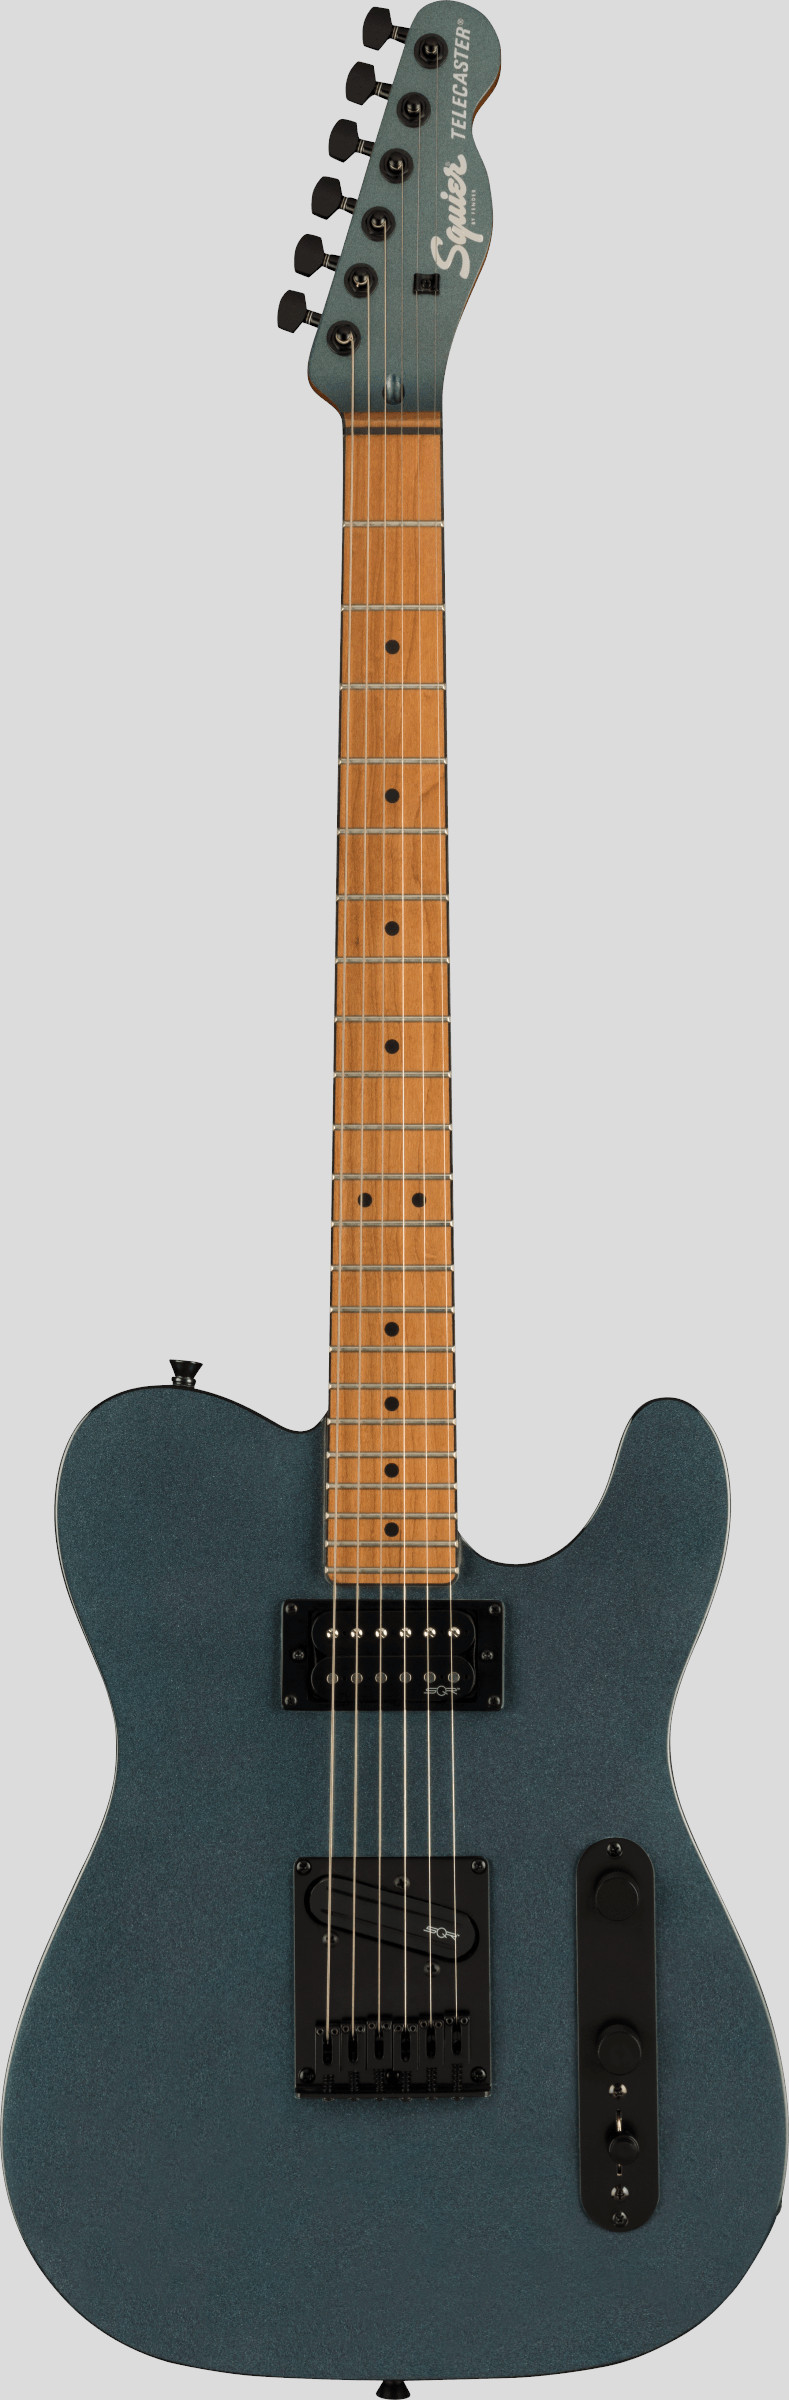 Squier by Fender Contemporary Telecaster RH Gunmetal Metallic 1